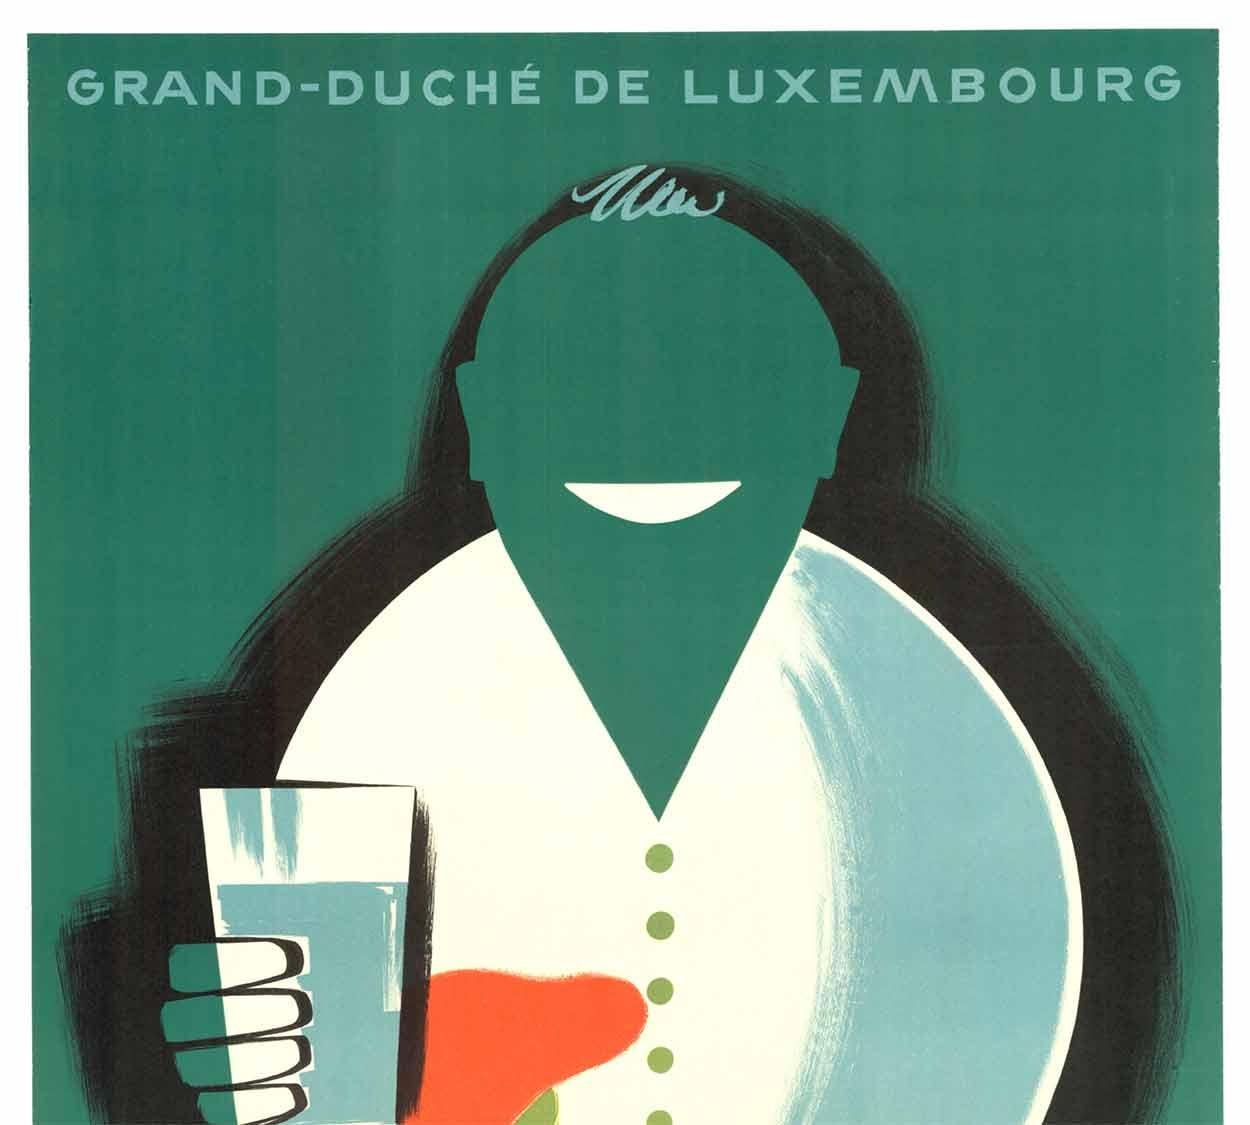 Original Mondorf-les-Baines vintage spa poster - Print by Lex Weyer